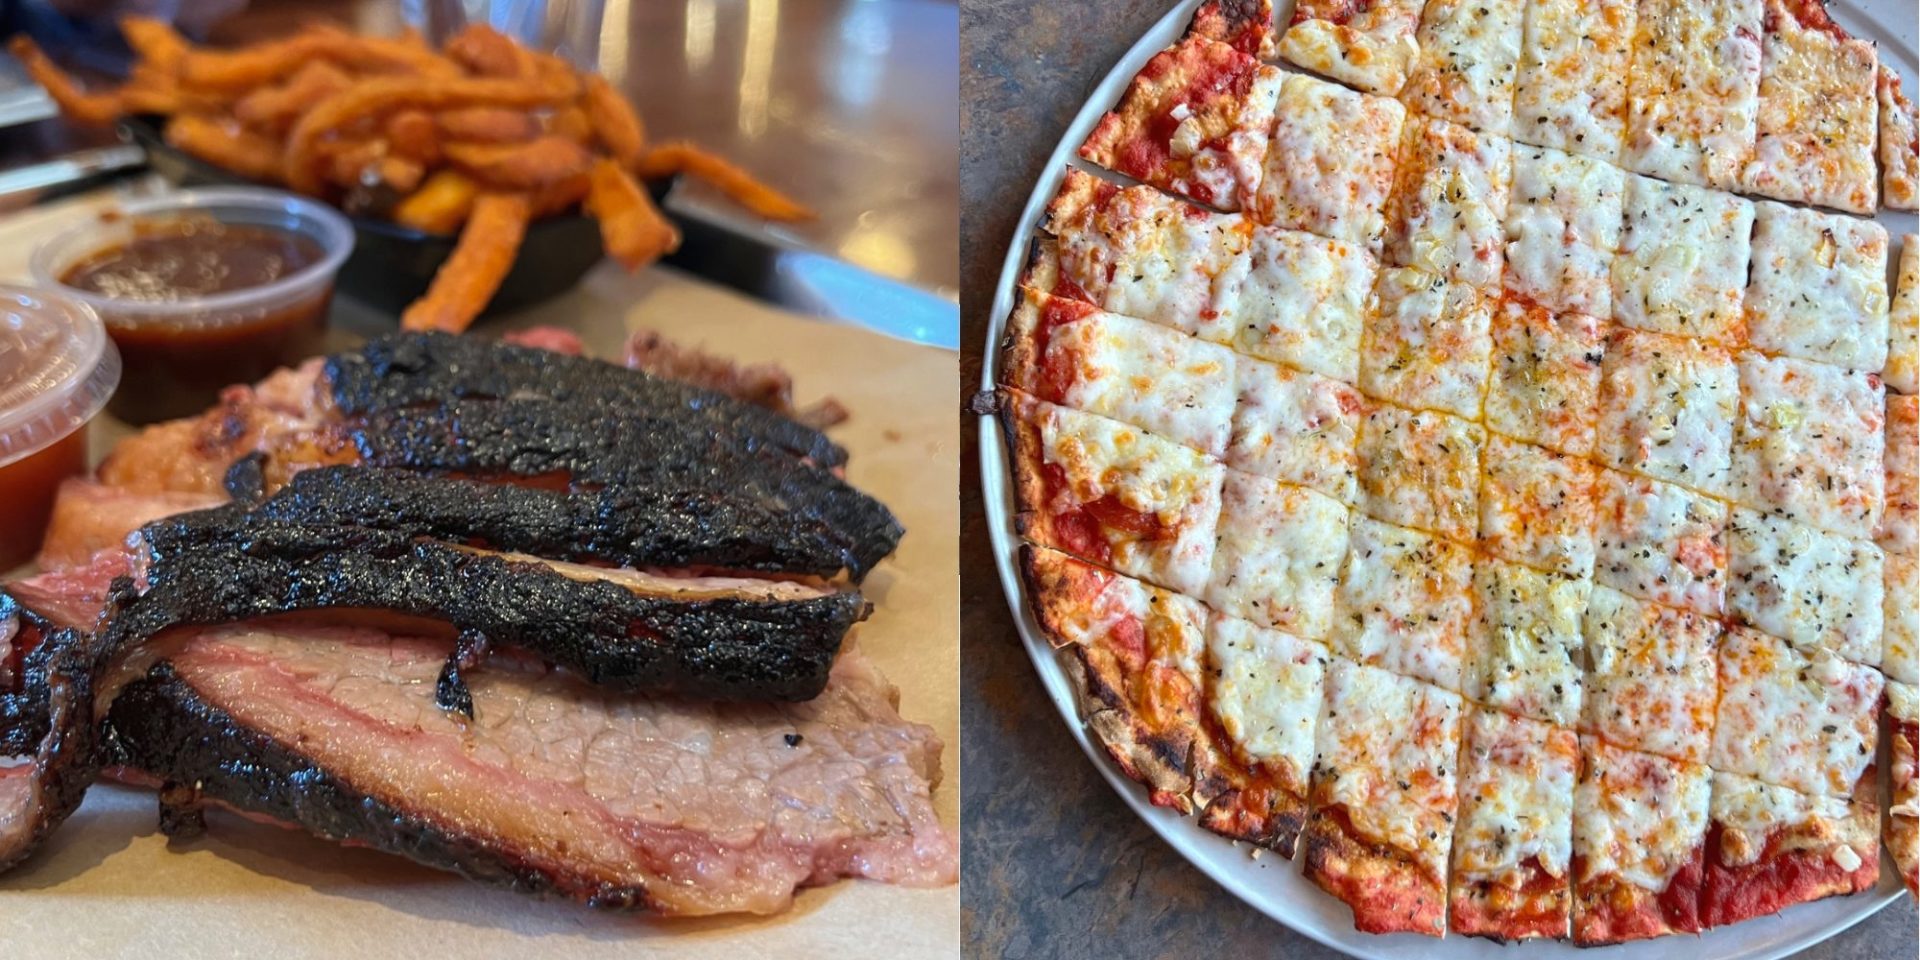 Bracket Breakdown: Black Dog burnt ends versus Old Orchard thin-crust pizza